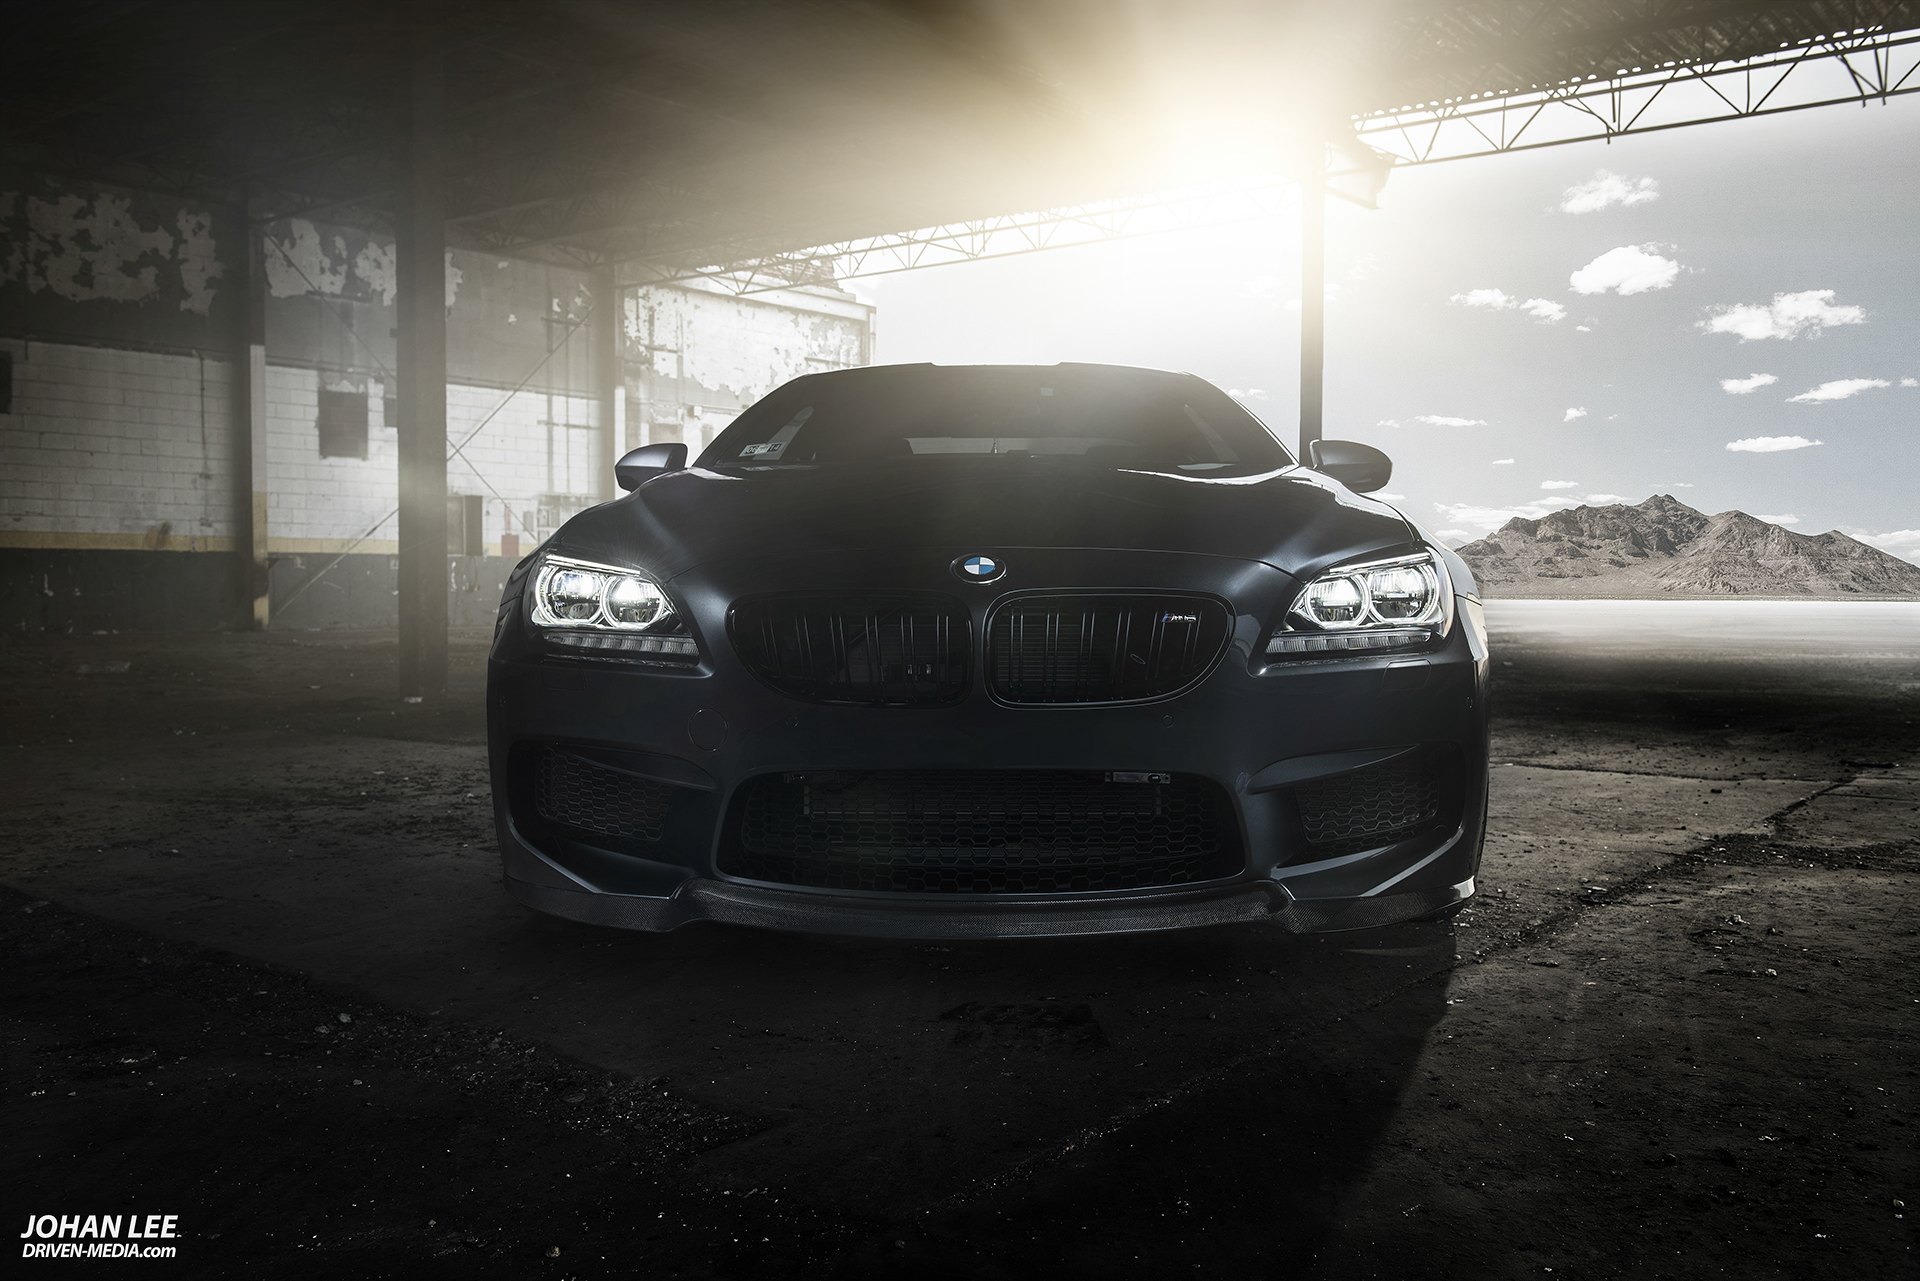 Black BMW 6-Series with Crystal Clear Halo Headlights - Photo by Johan Lee